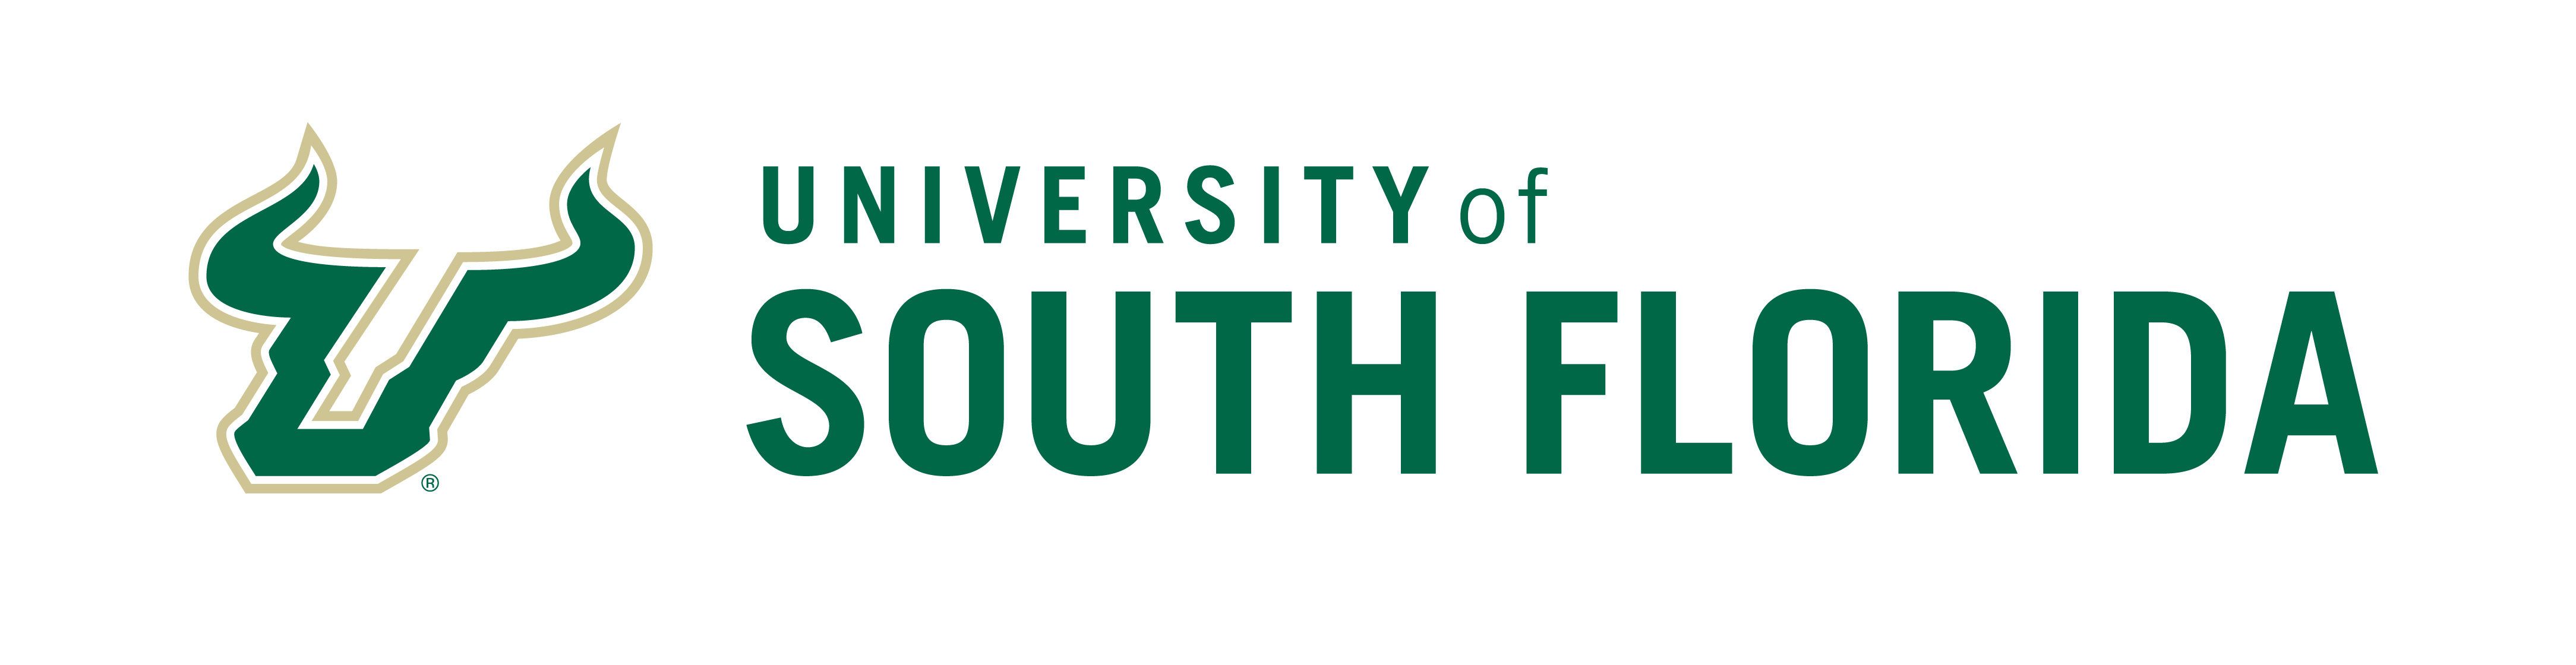 INTO University of South Florida